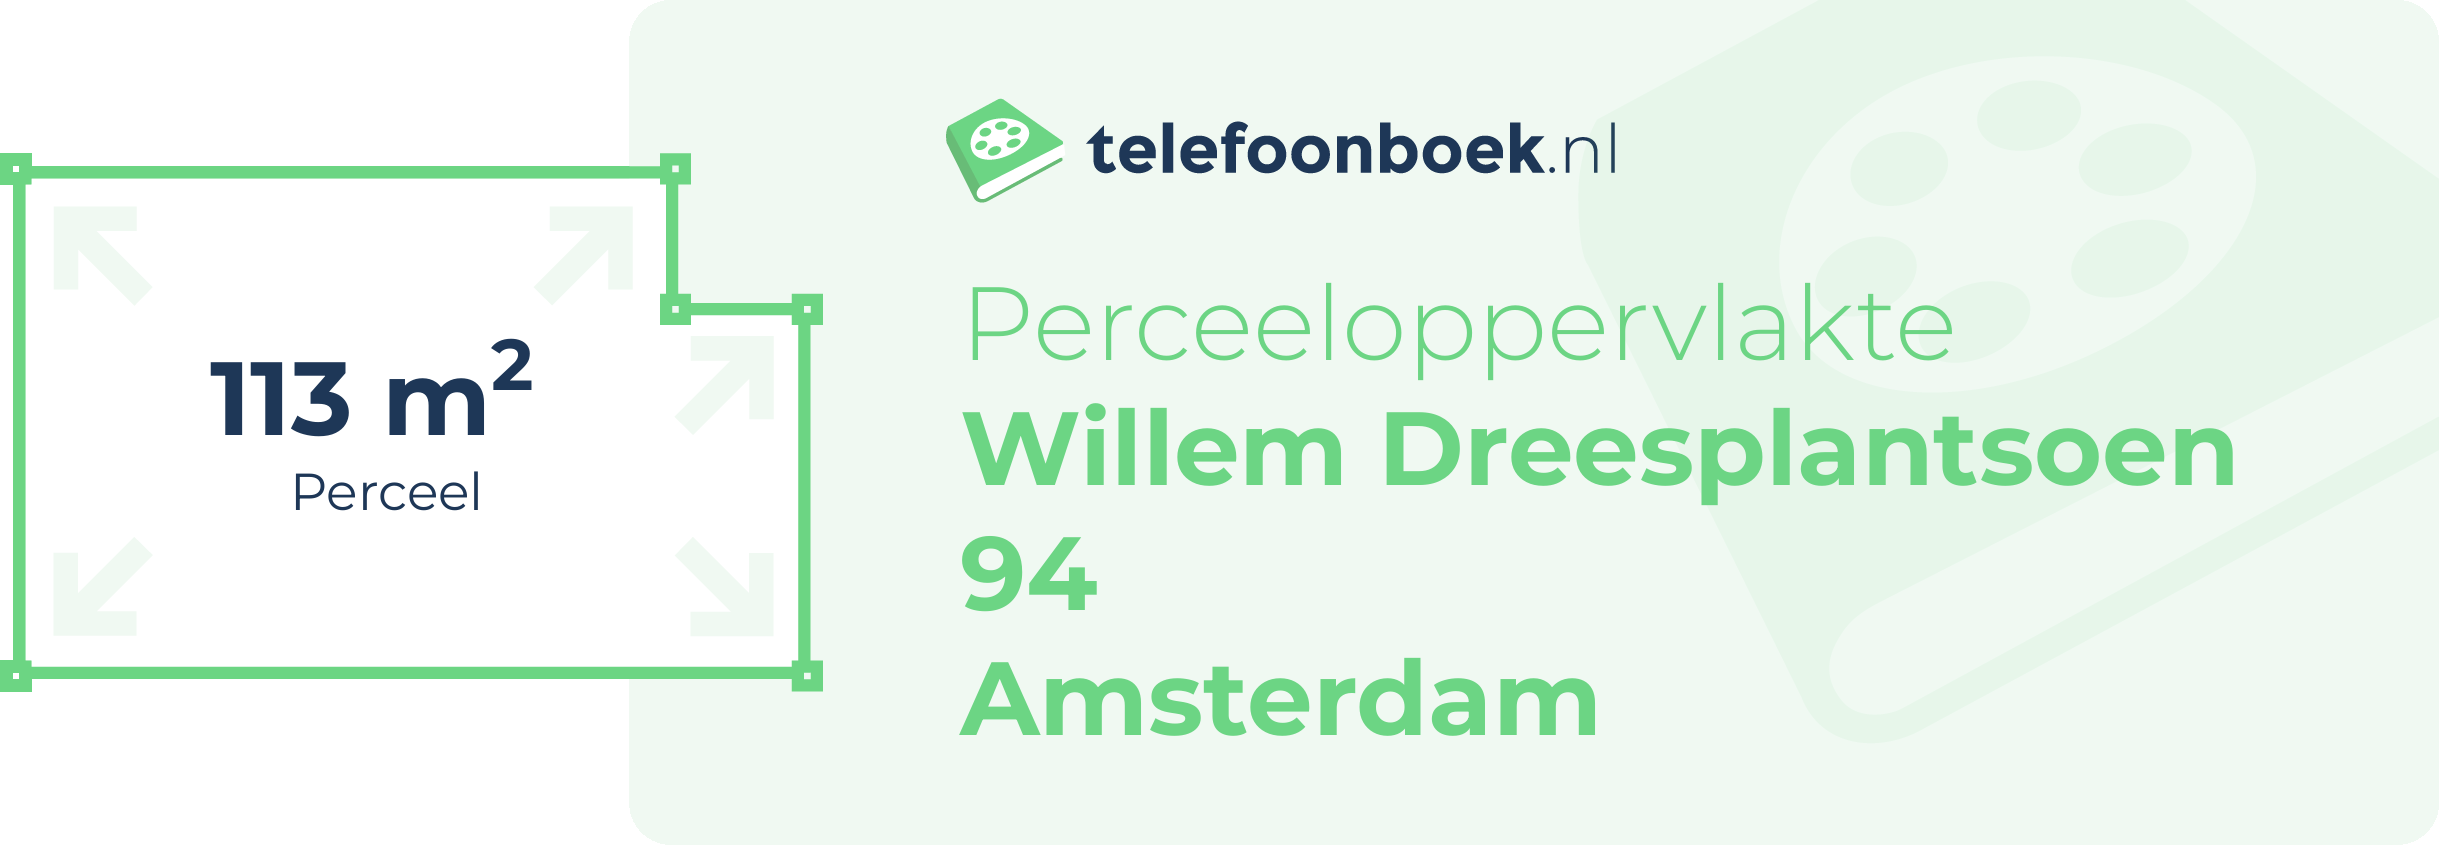 Perceeloppervlakte Willem Dreesplantsoen 94 Amsterdam